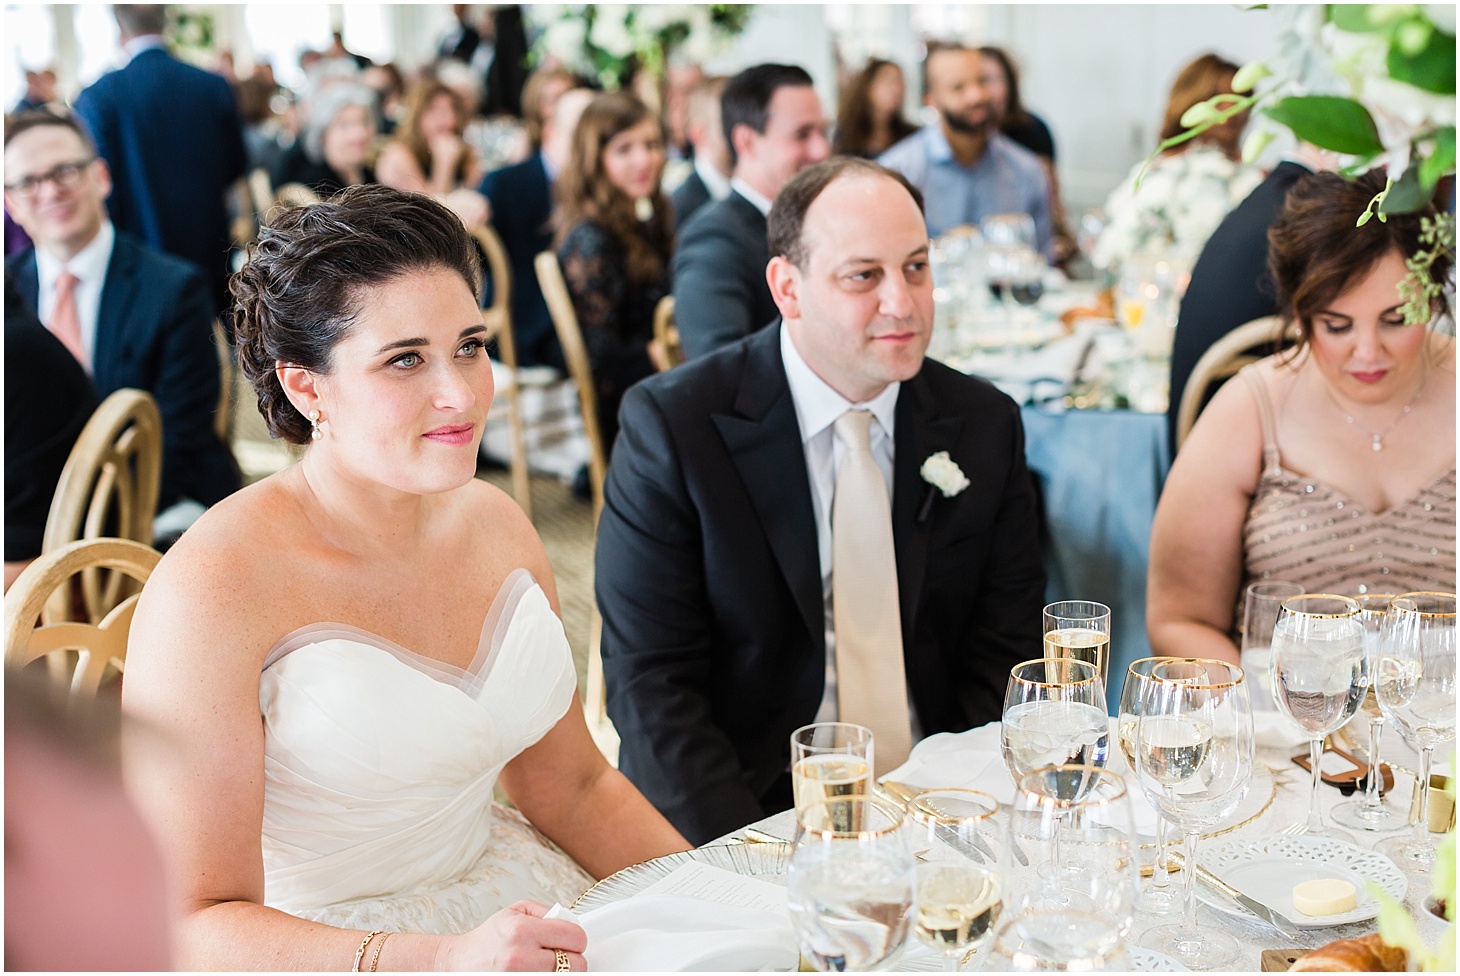 Wedding Reception at the Hay-Adams Hotel | Winter Brunch Wedding at Hay-Adams Hotel in DC | Sarah Bradshaw Photography